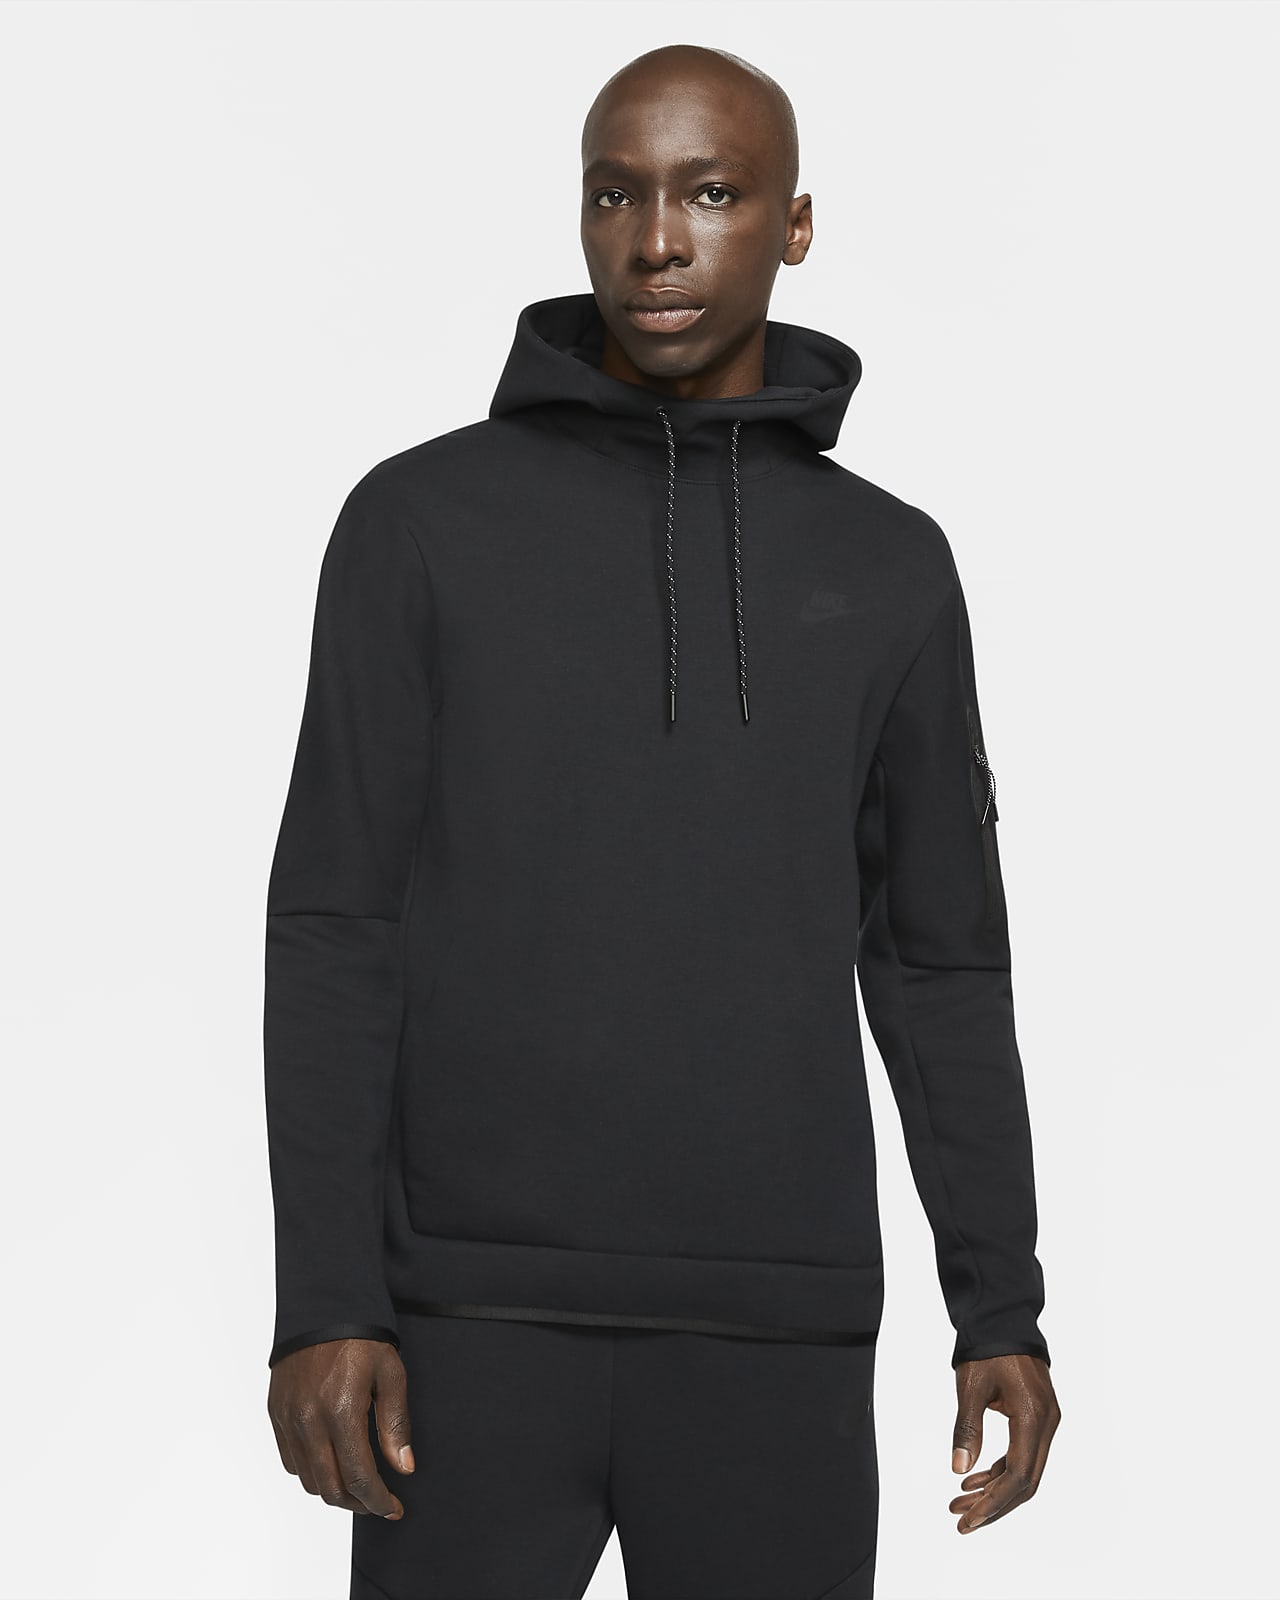 Nike Sportswear Tech Fleece Dessuadora amb caputxa - Home